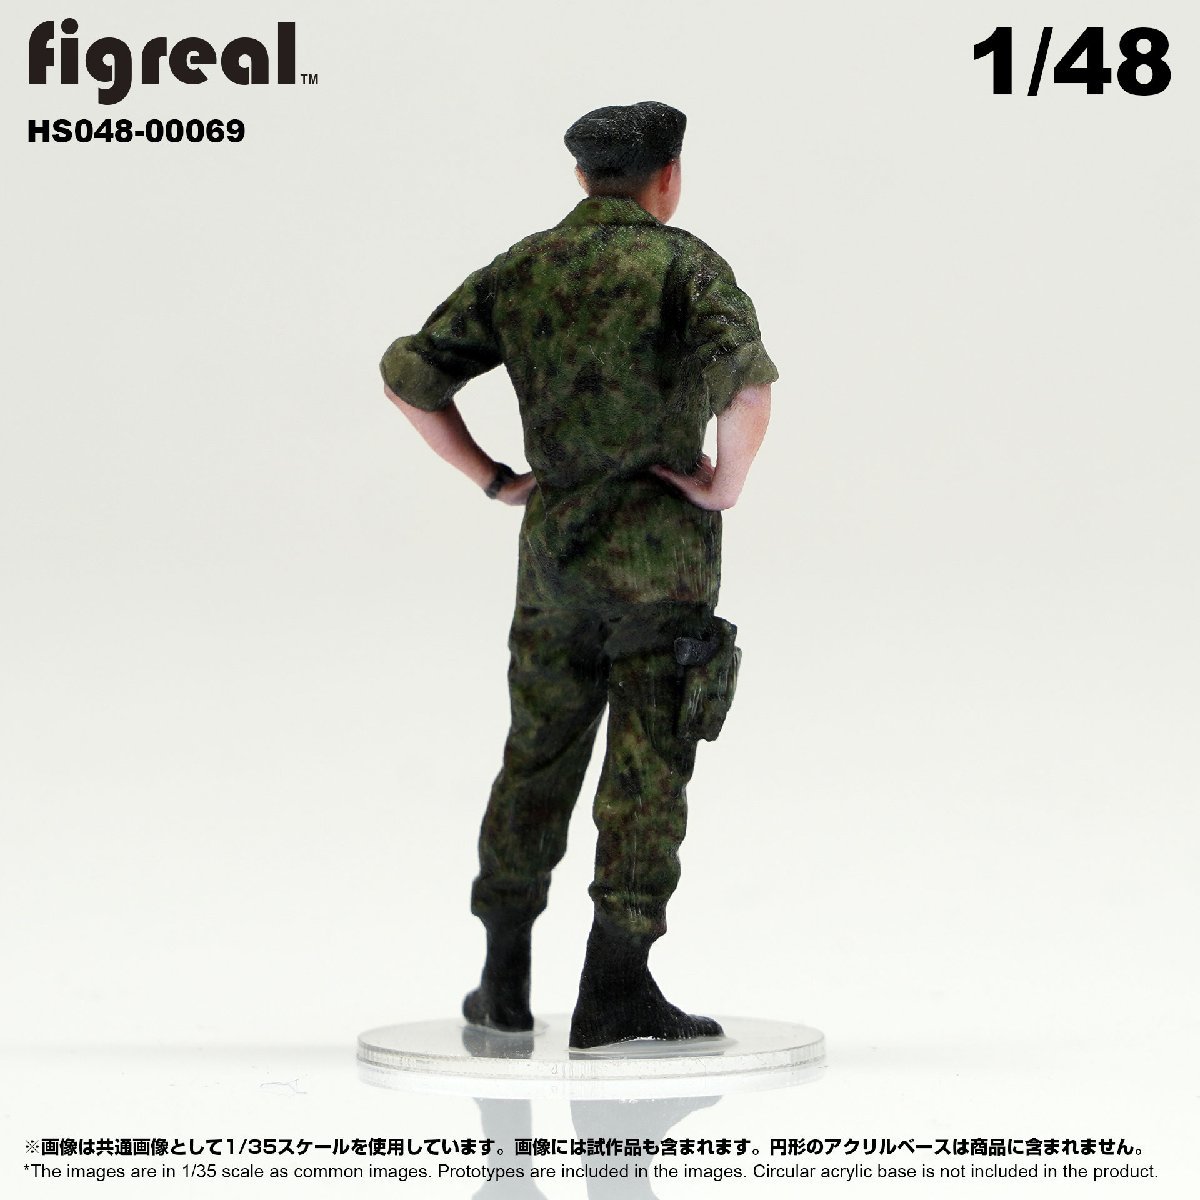 HS048-00069 figreal 陸上自衛隊 1/48 JGSDF 高精細フィギュア_画像5